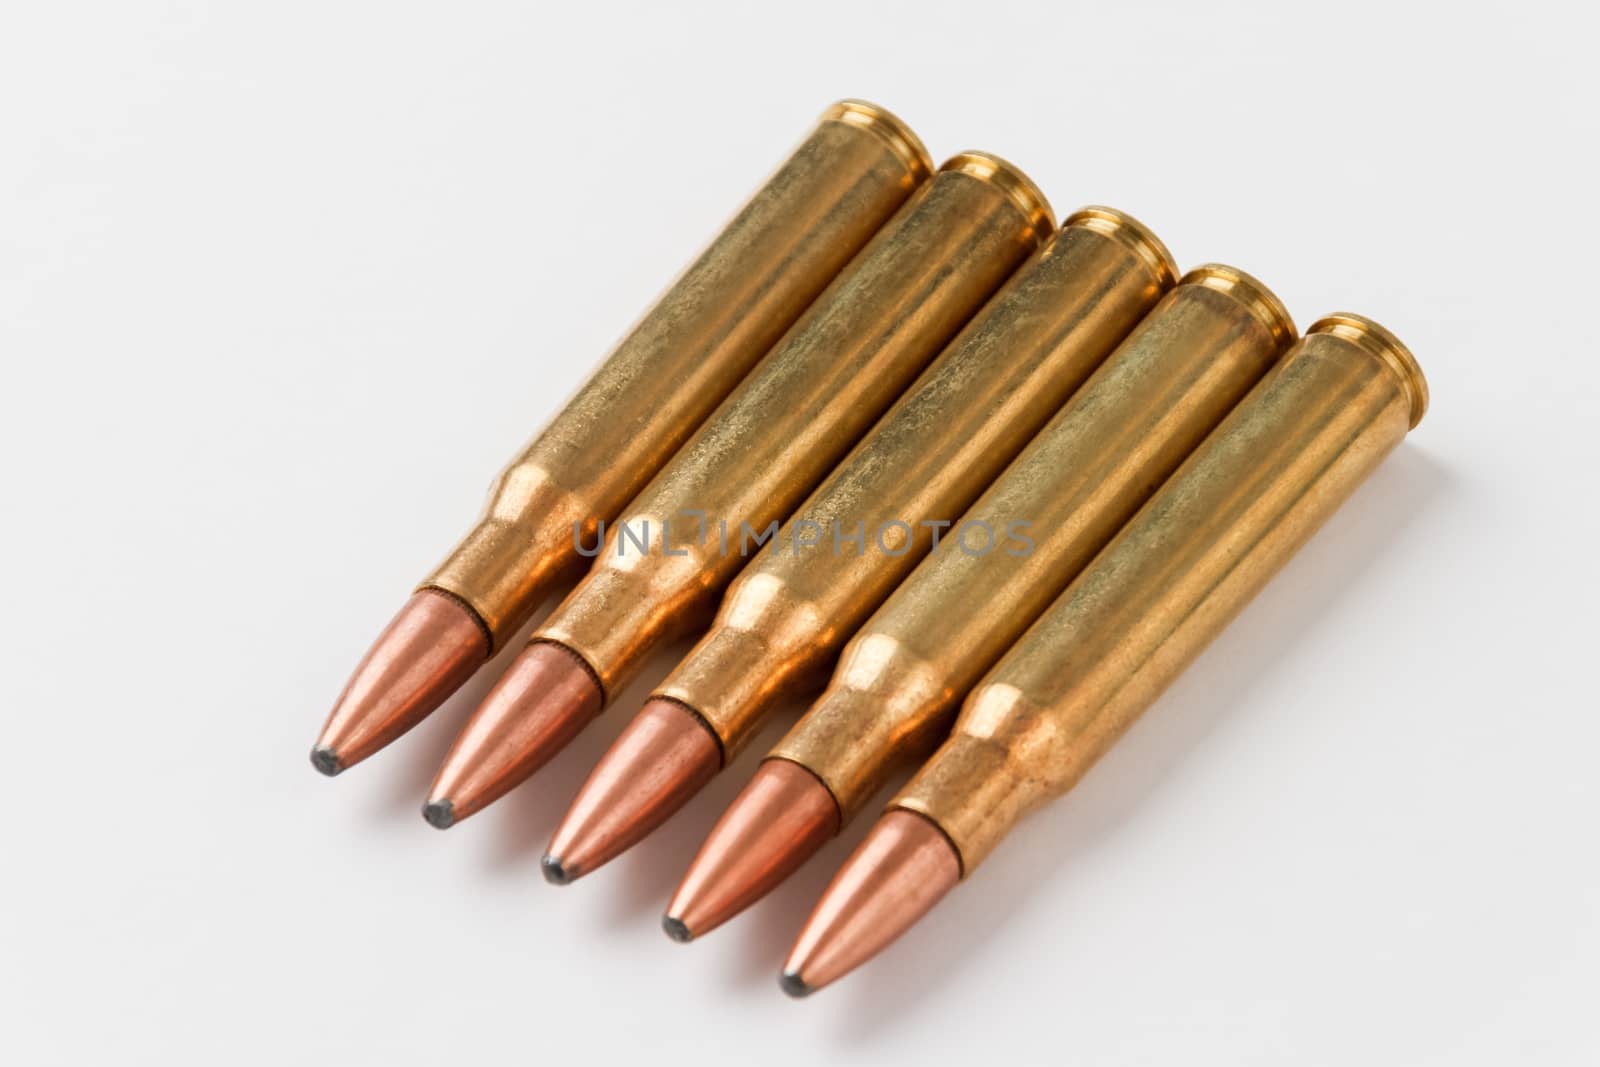 30-06 hunting rifle ammunition by lprising